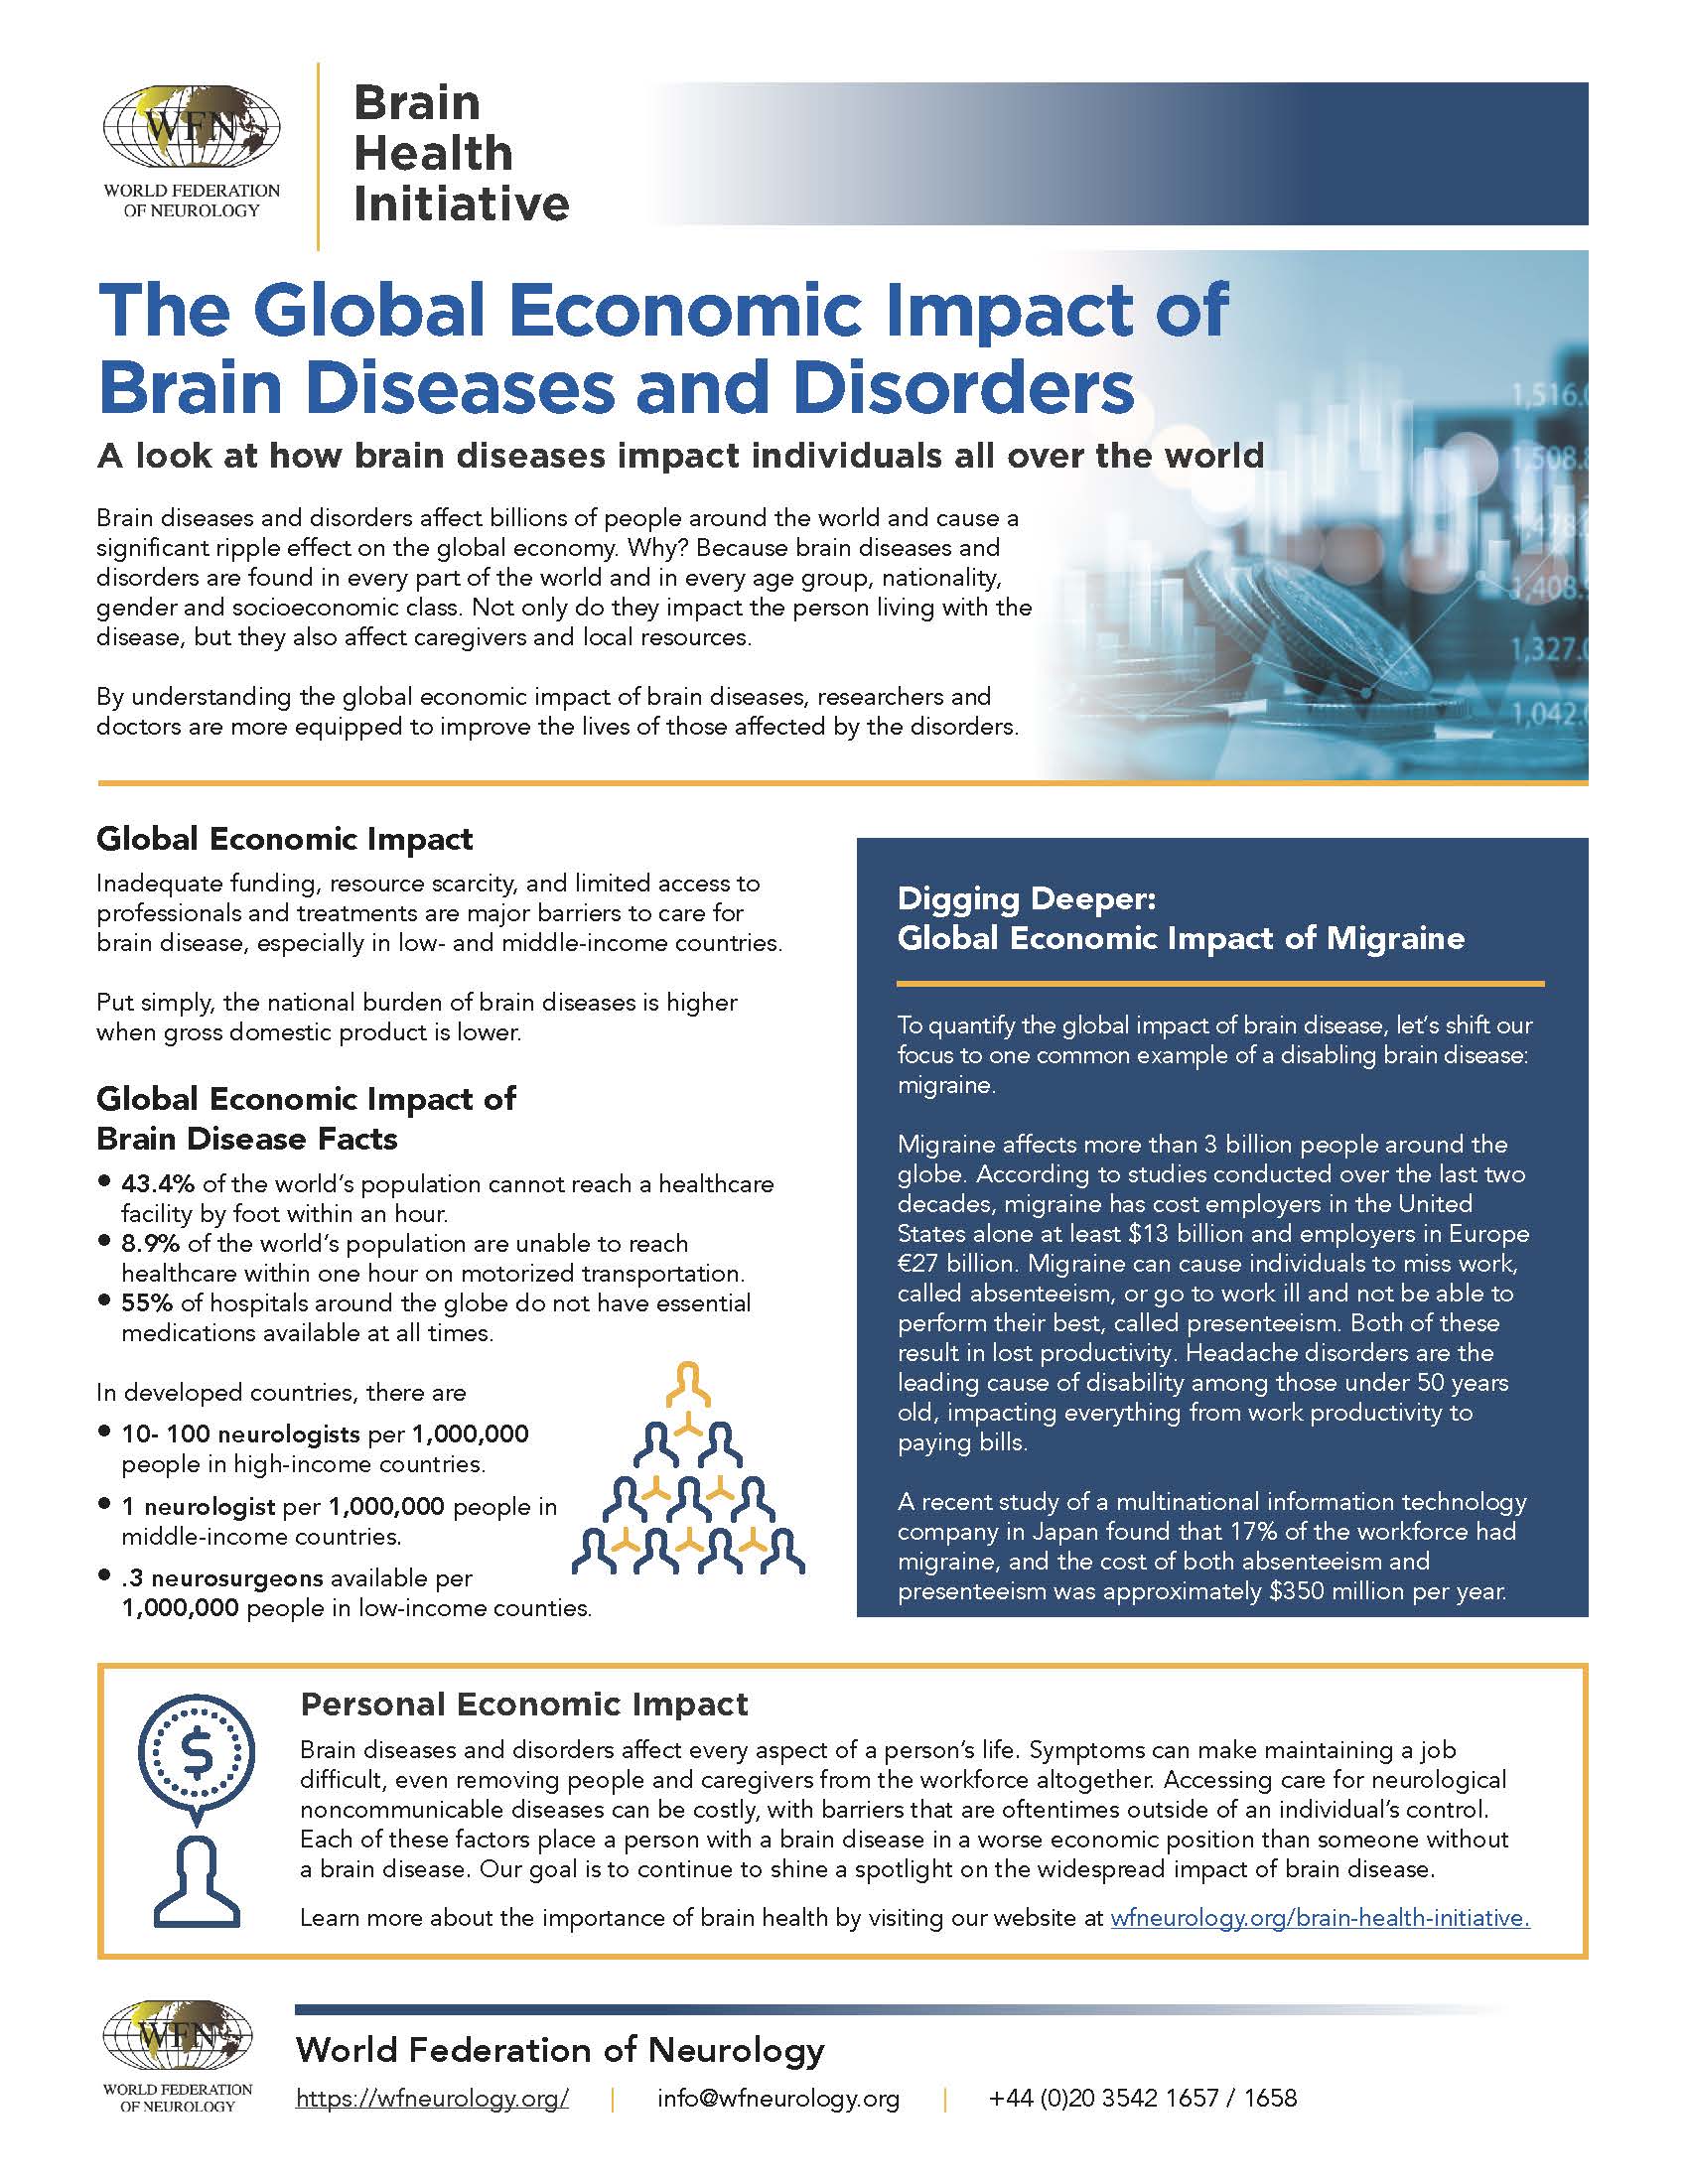 Global Economic Impact of Brain Disease